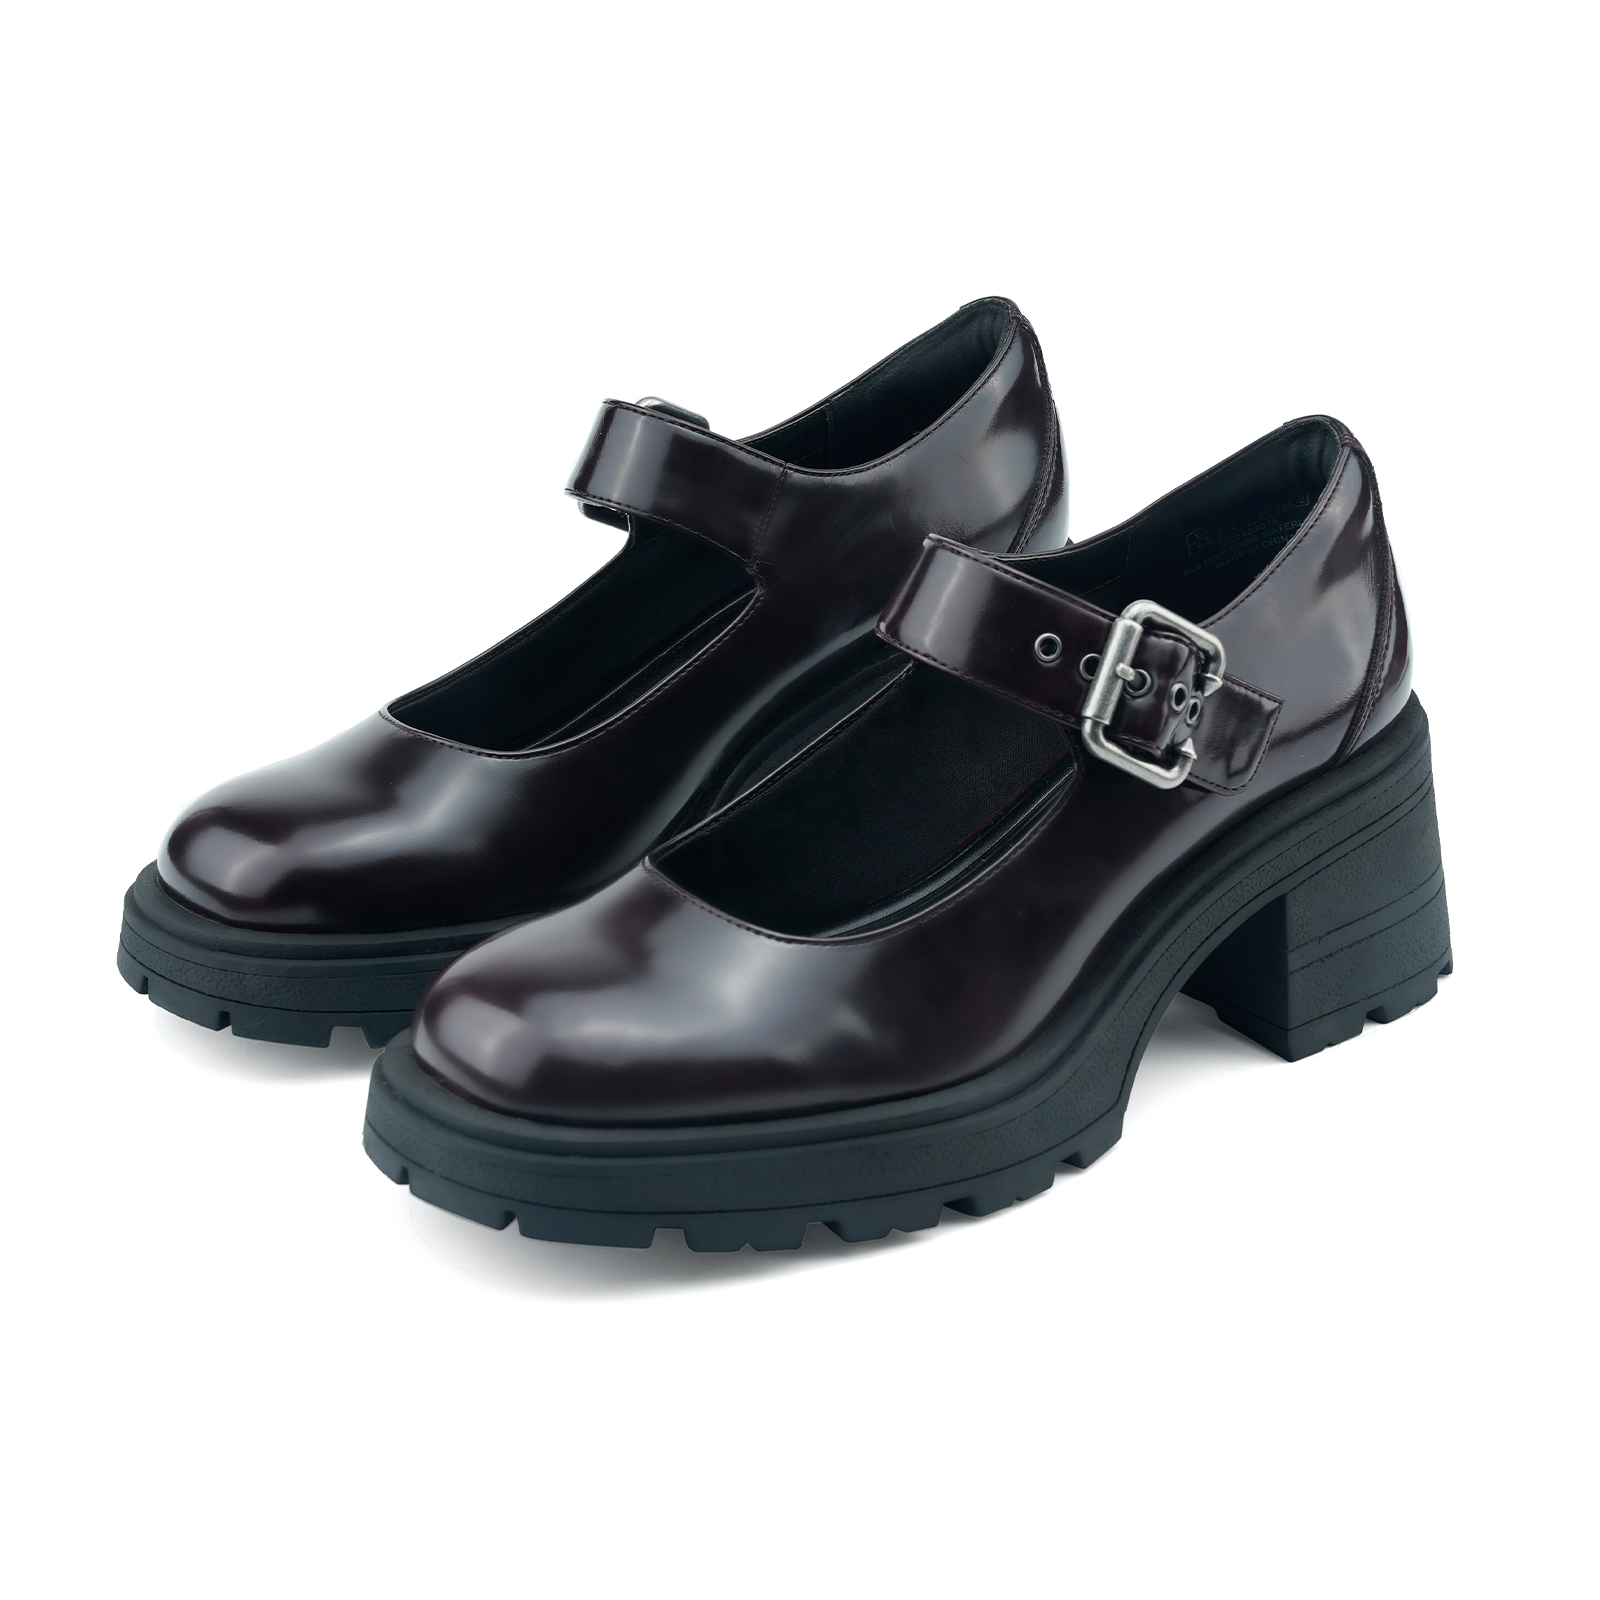 Womens platform Mary janes Shoes Sweet Toe Ankle Lolita Gothic Platform ...